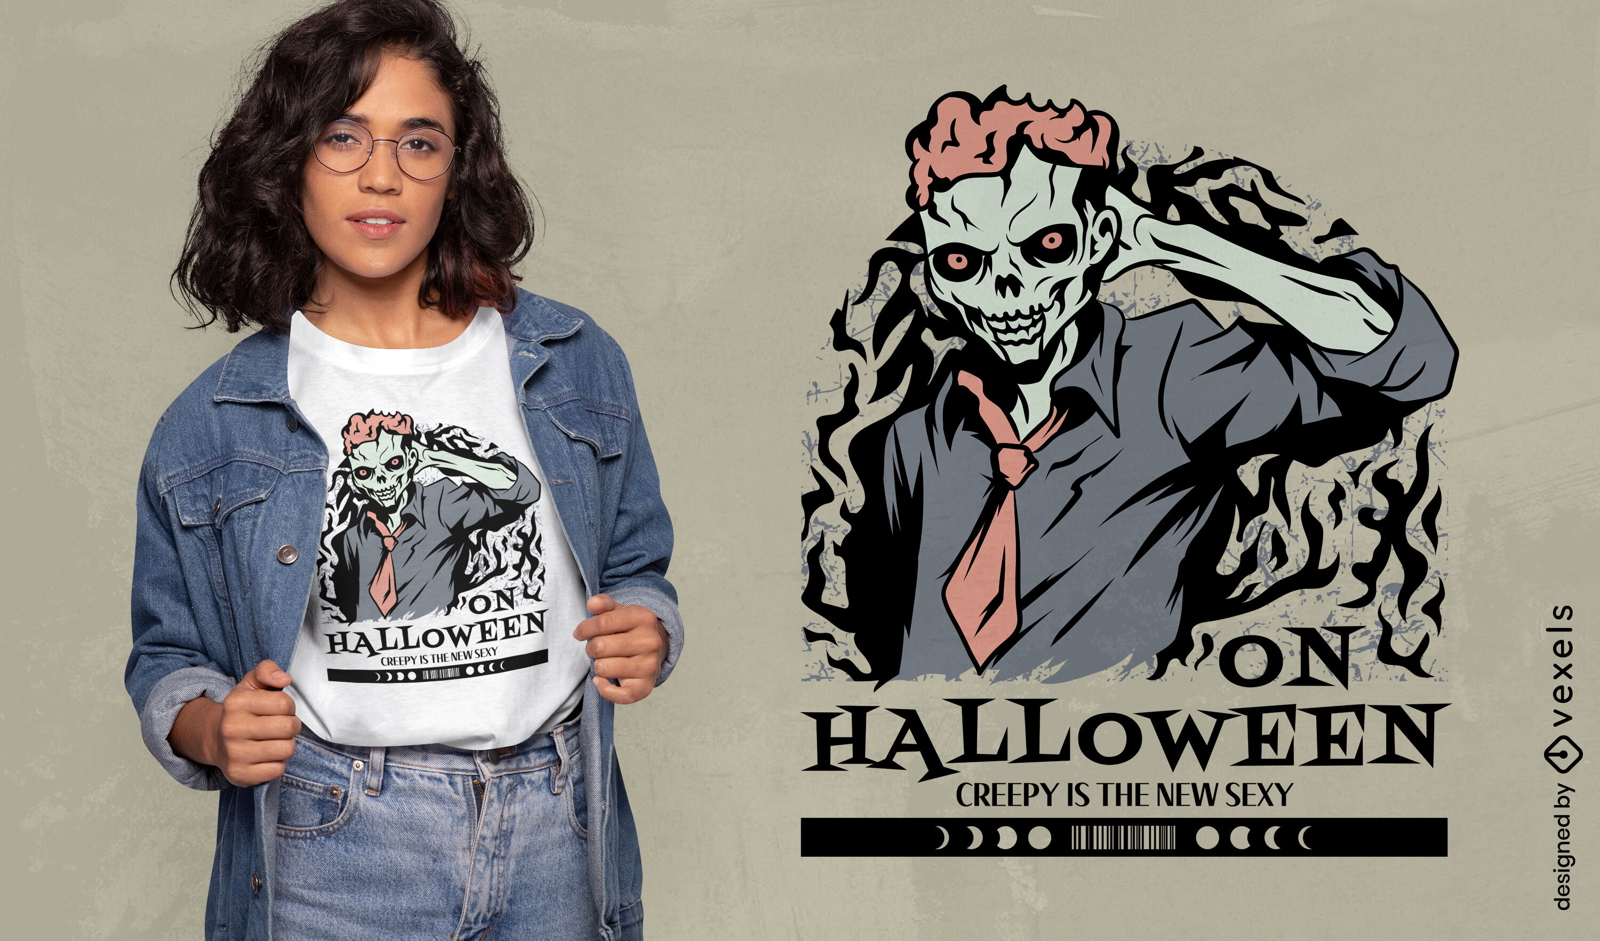 Creepy sexy Halloween t-shirt design